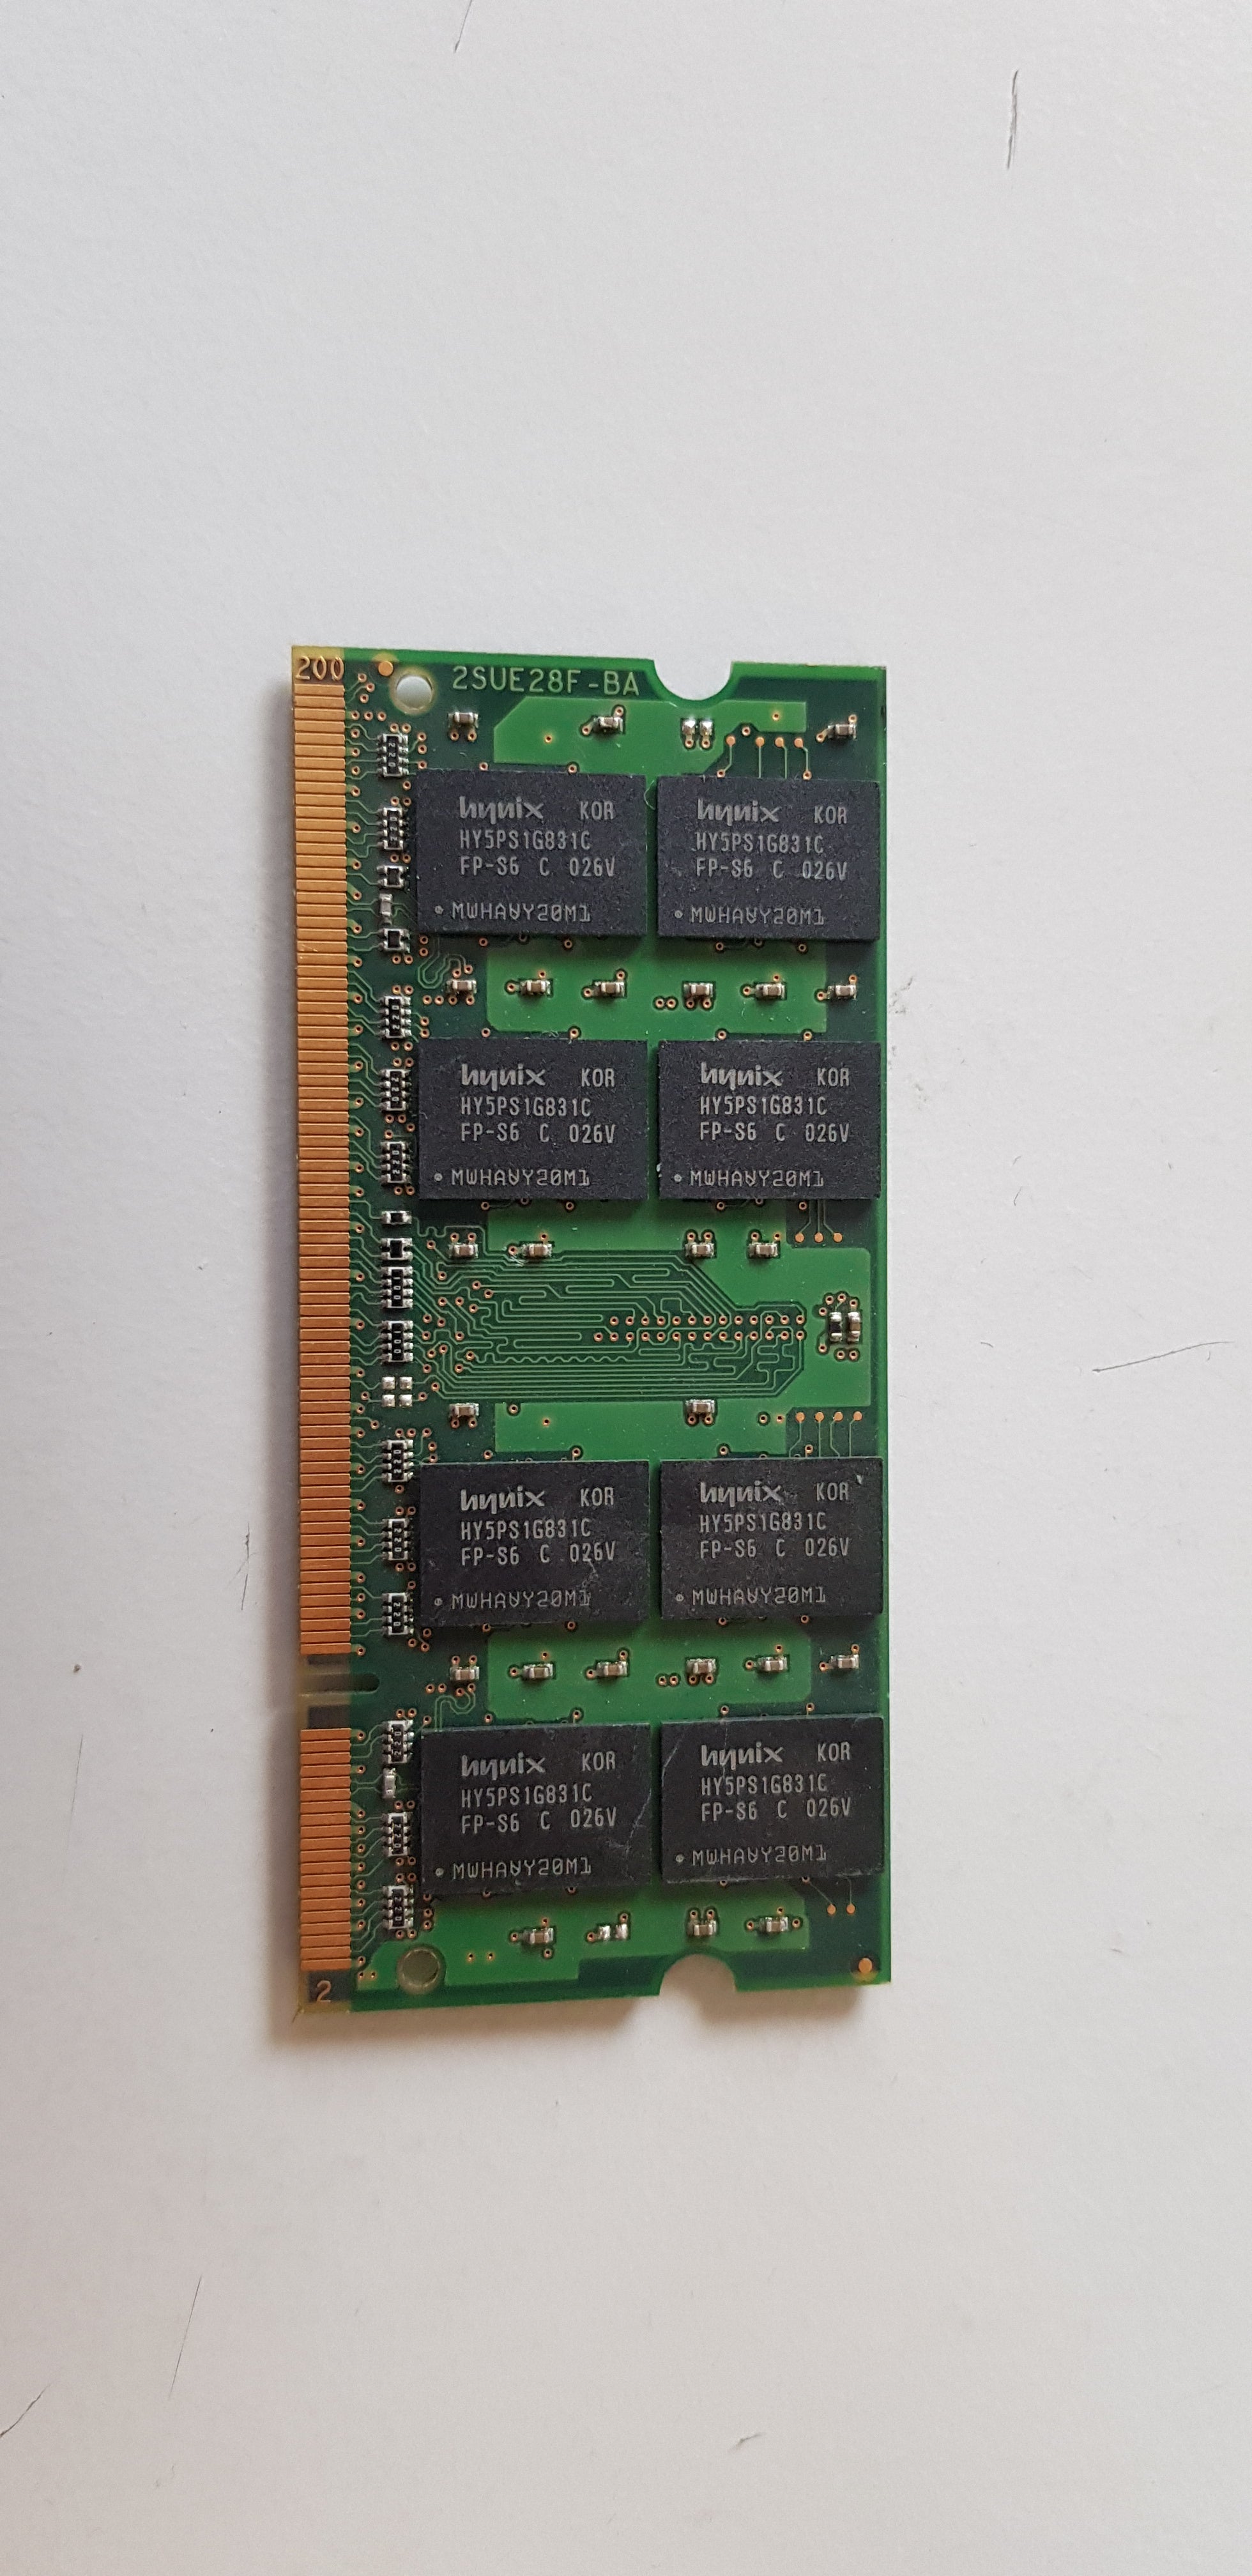 Buffalo 2GB 533Mhz PC2-4200S CL4 1.8V UNB RAM DDR2 LAPTOP SODIMM D2N533B-2GHCJ9